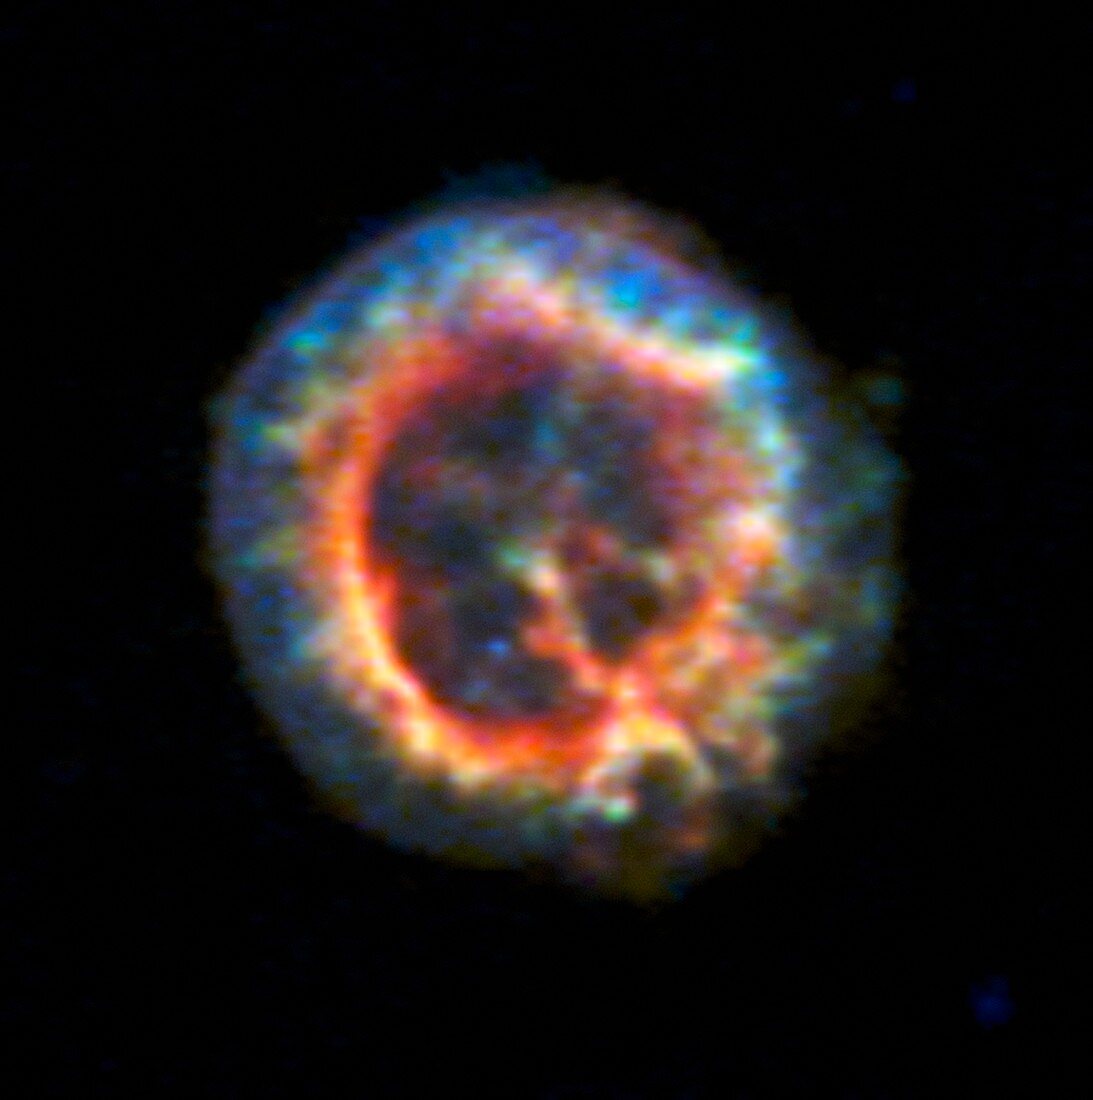 Supernova remnant and neutron star, X-ray image